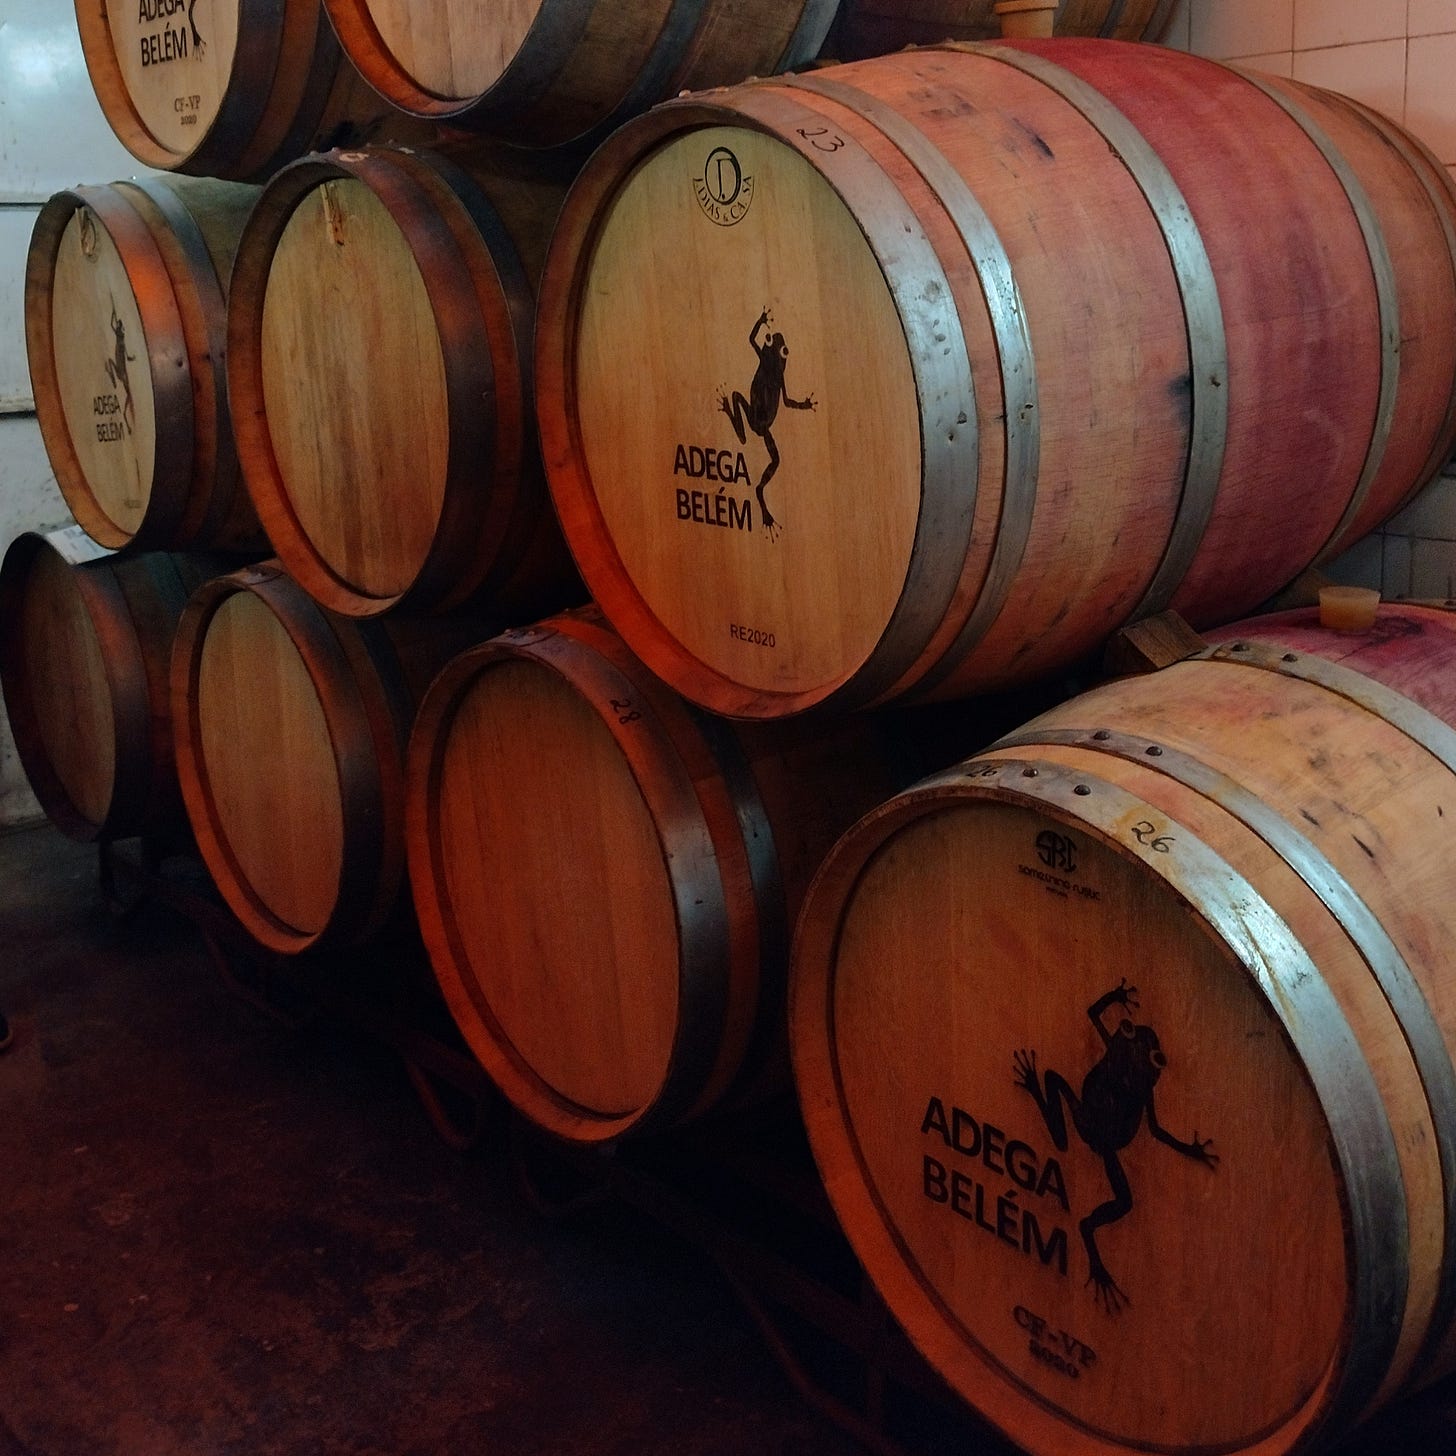 Wine barrels stacked